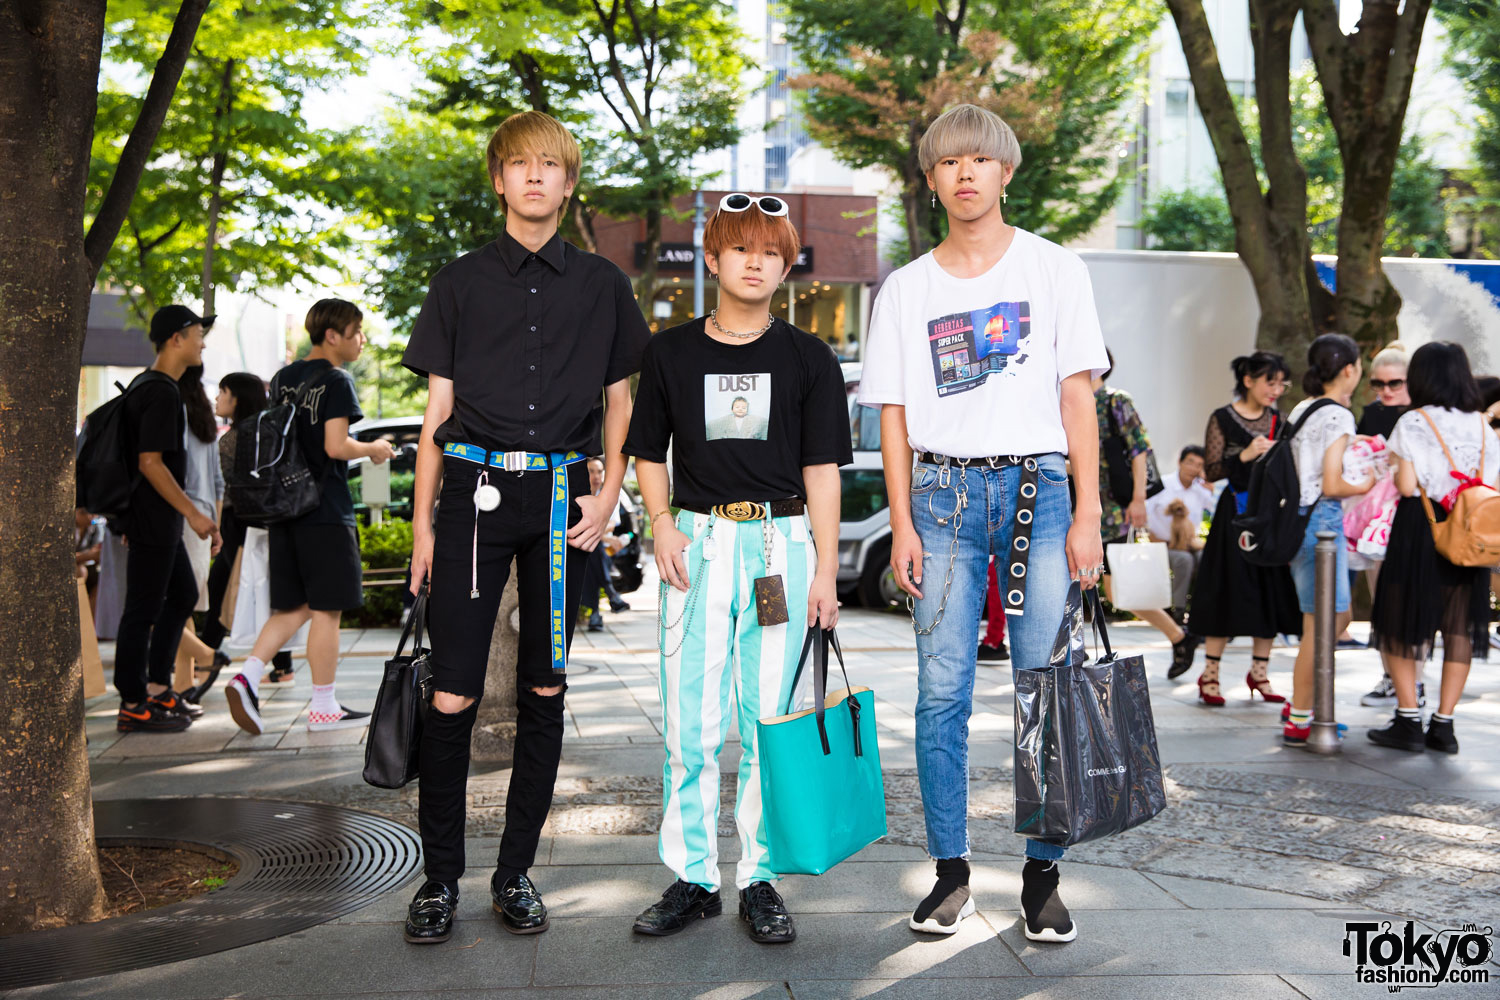 Harajuku Trio in Street Styles w/ Joyrich, Inc, Marni, Balenciaga, LV, Comme des Garcons & More Brands